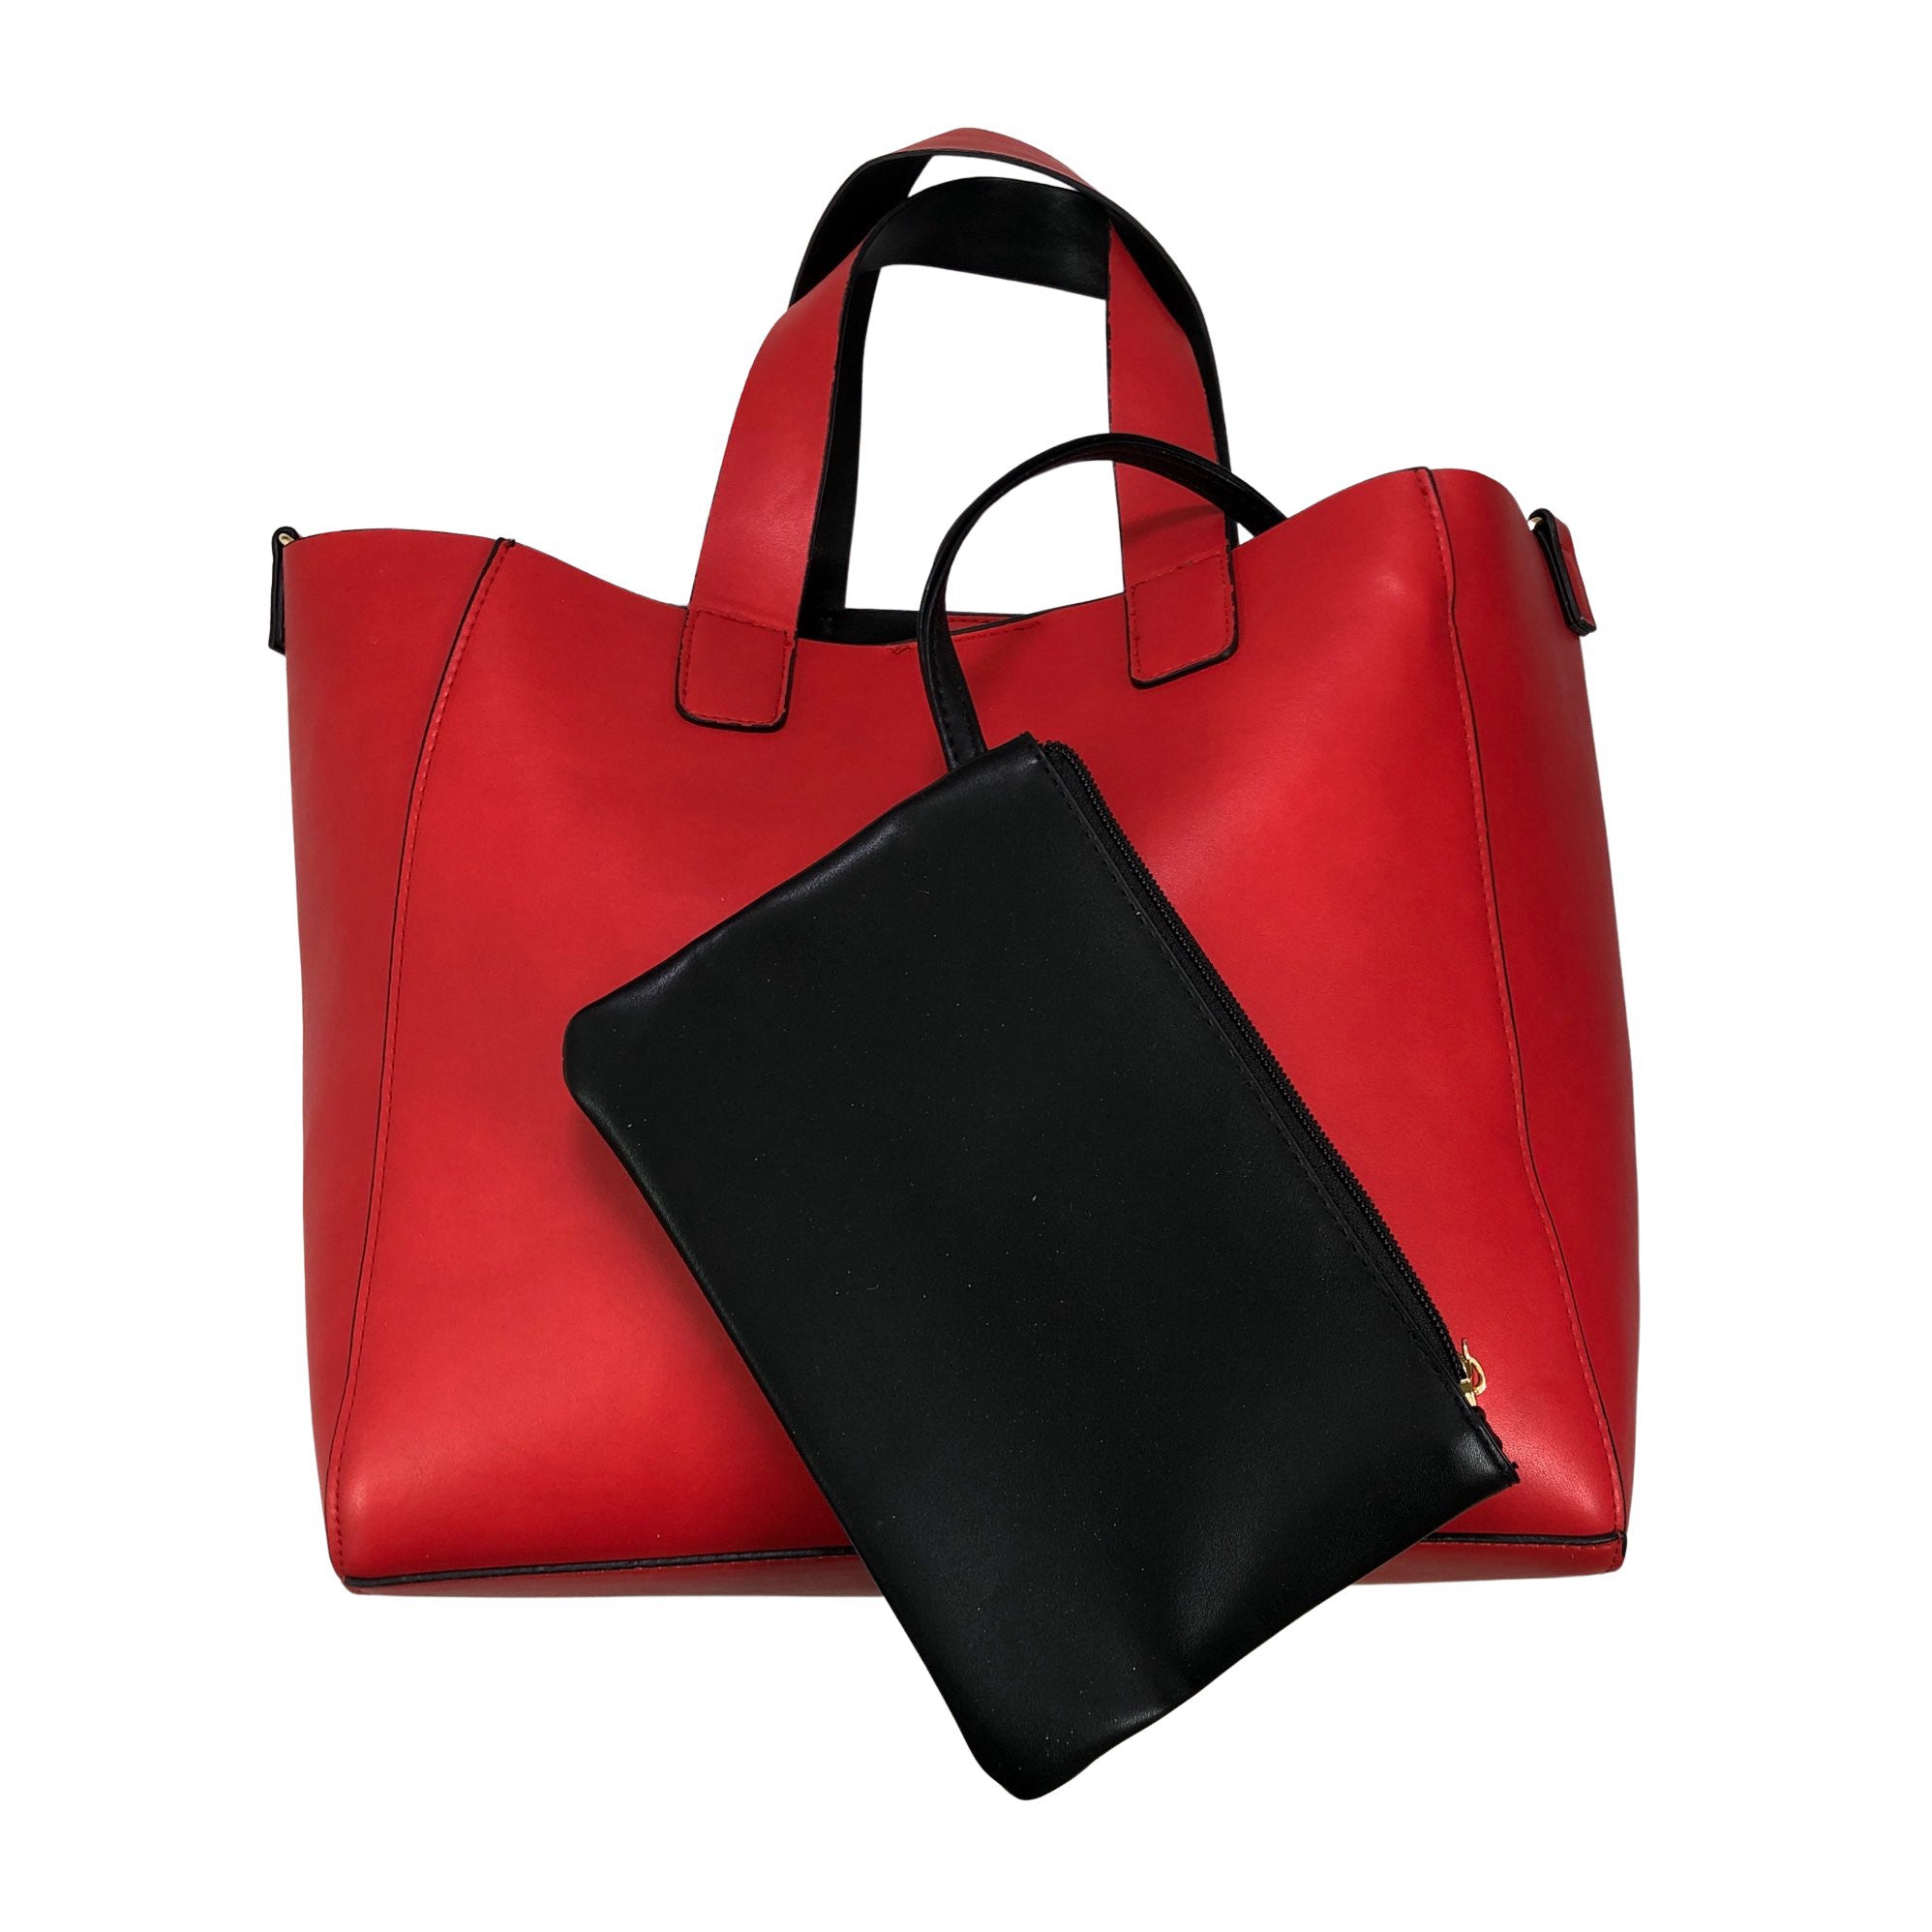 Women's Even&Odd Handbag, size Maxi (Red)